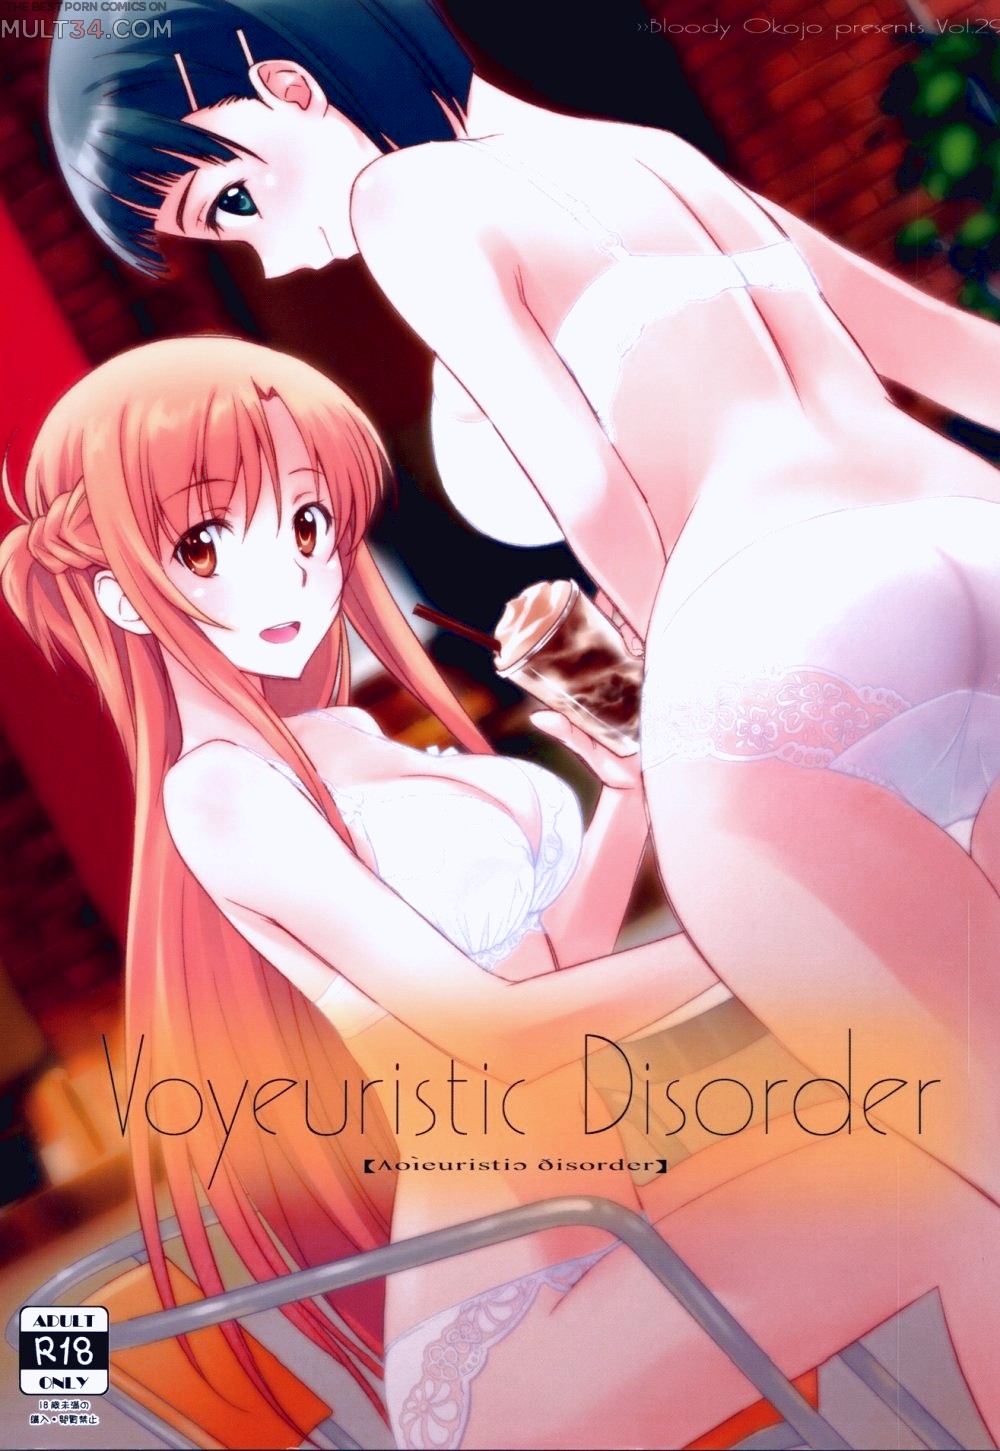 Voyeuristic Disorder hentai manga page 1 on category Sword Art Online